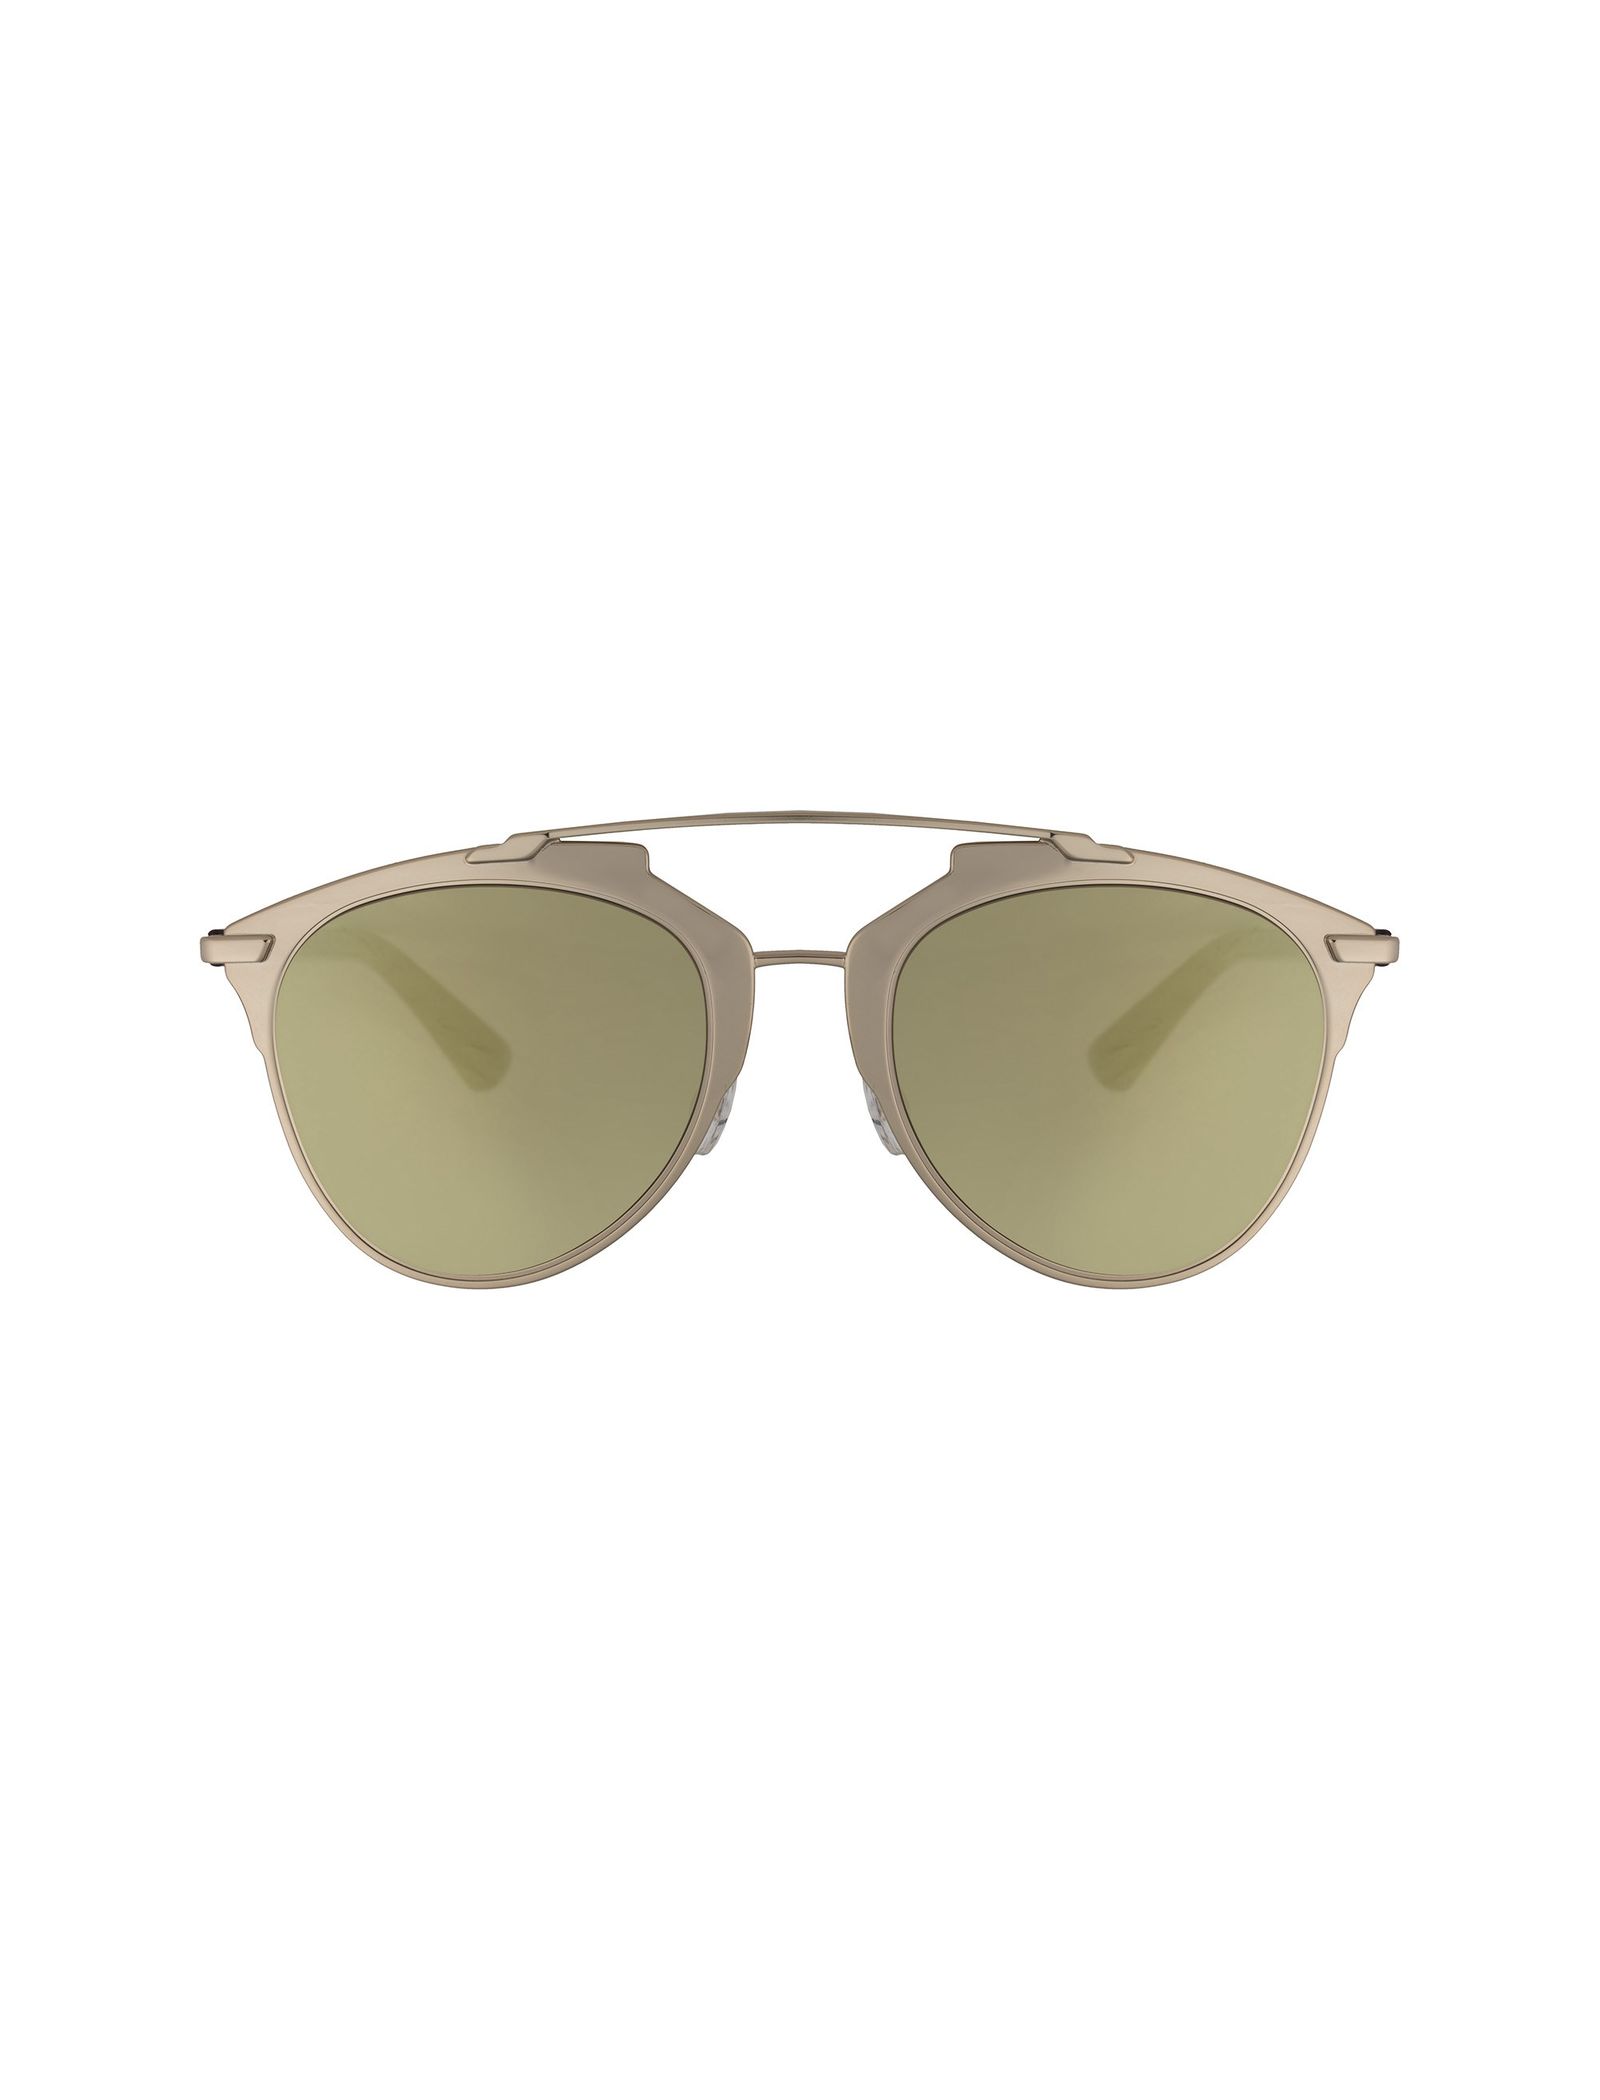 عینک آفتابی خلبانی زنانه - دیور - طلايي و بادمجاني - 2